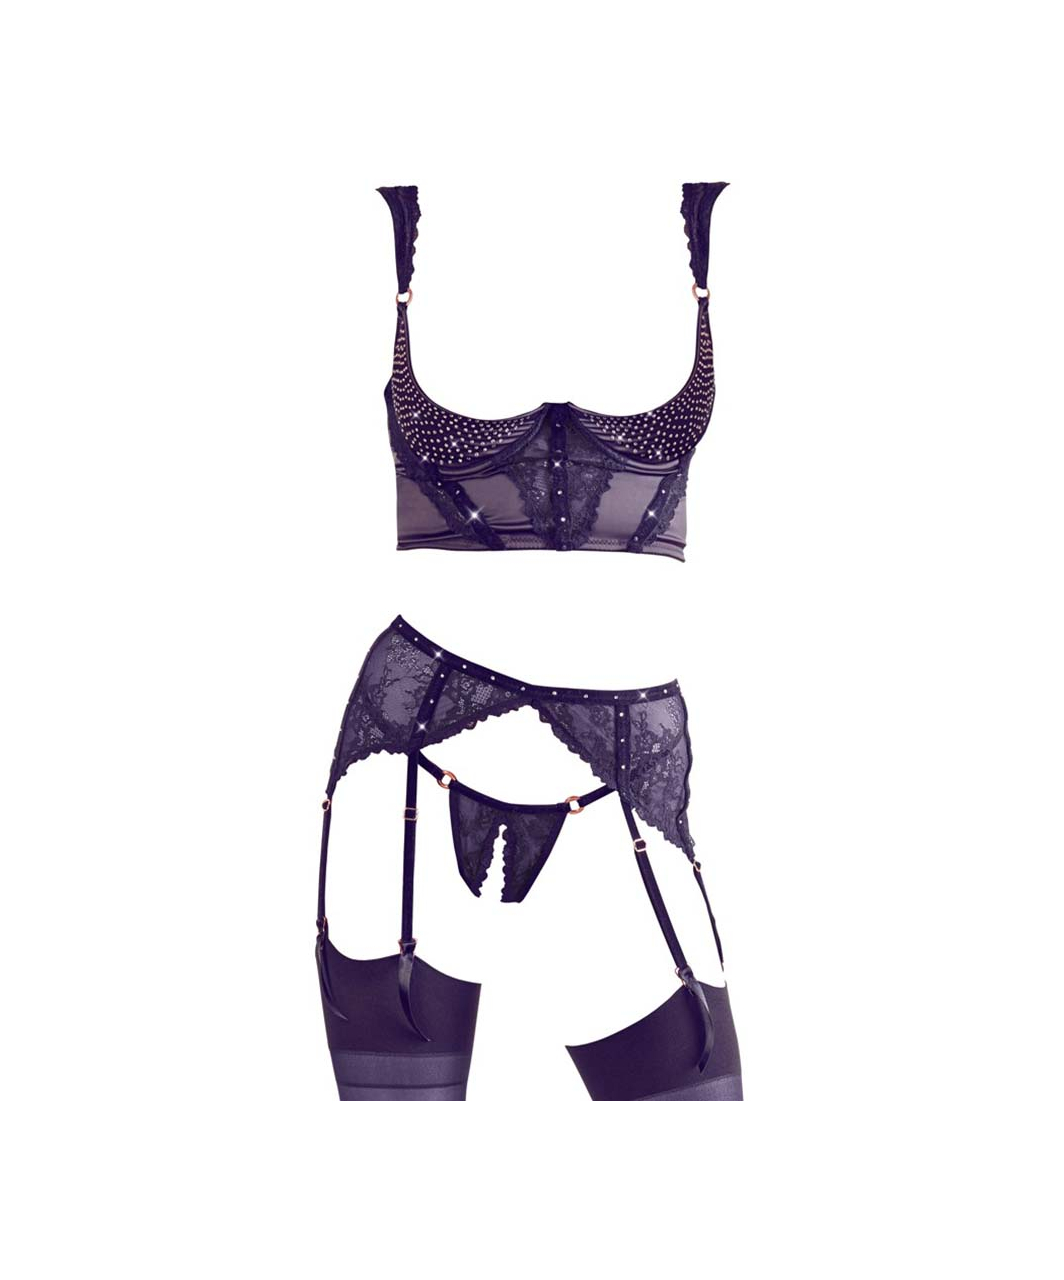 Abierta Fina black 3-piece suspender set with rhinestones